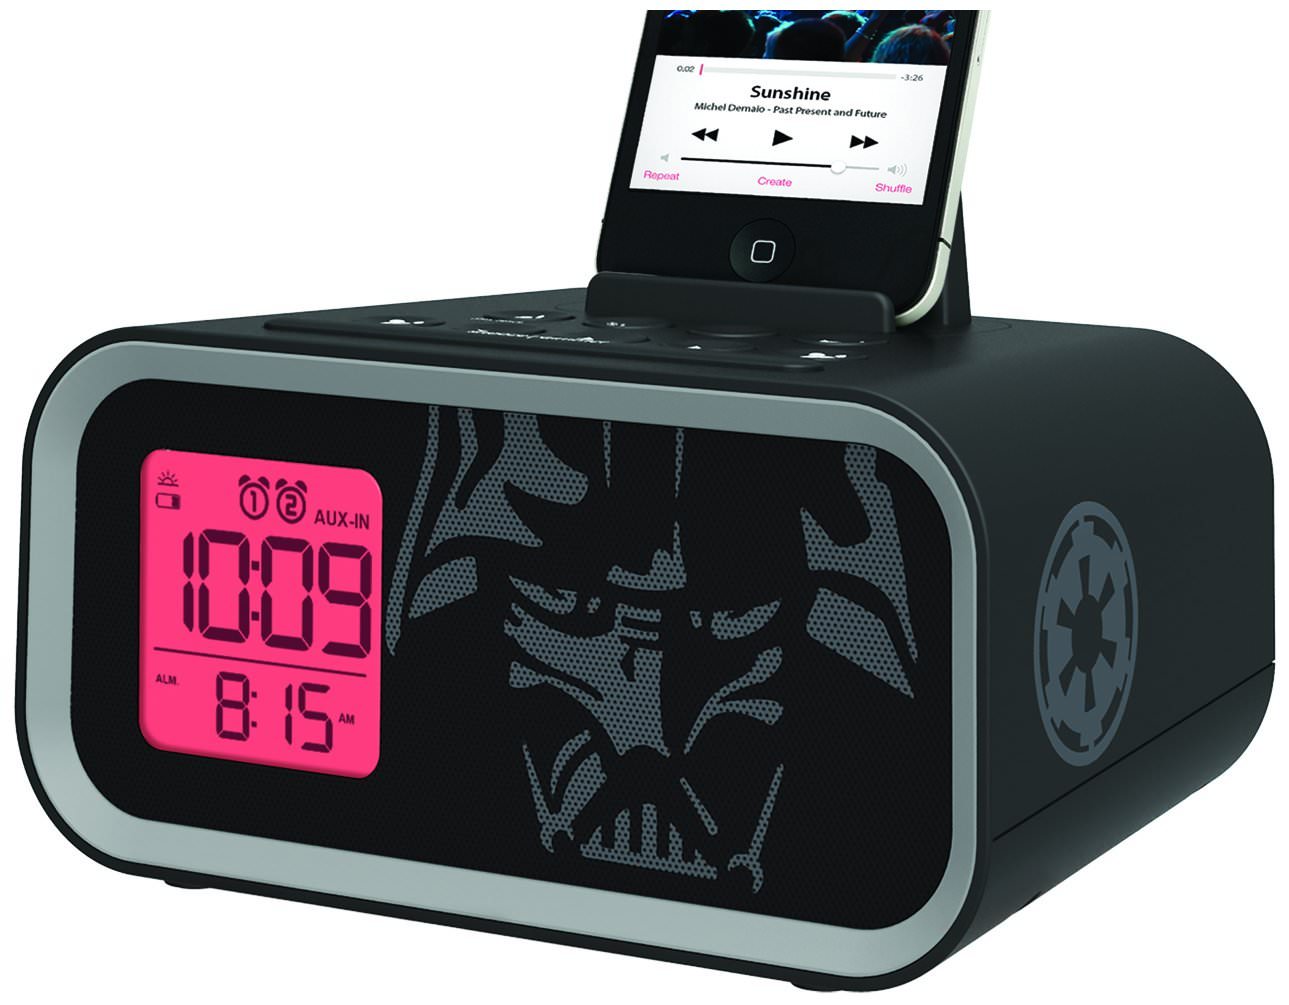 Alarm Clock Speaker System » Gadget Blog